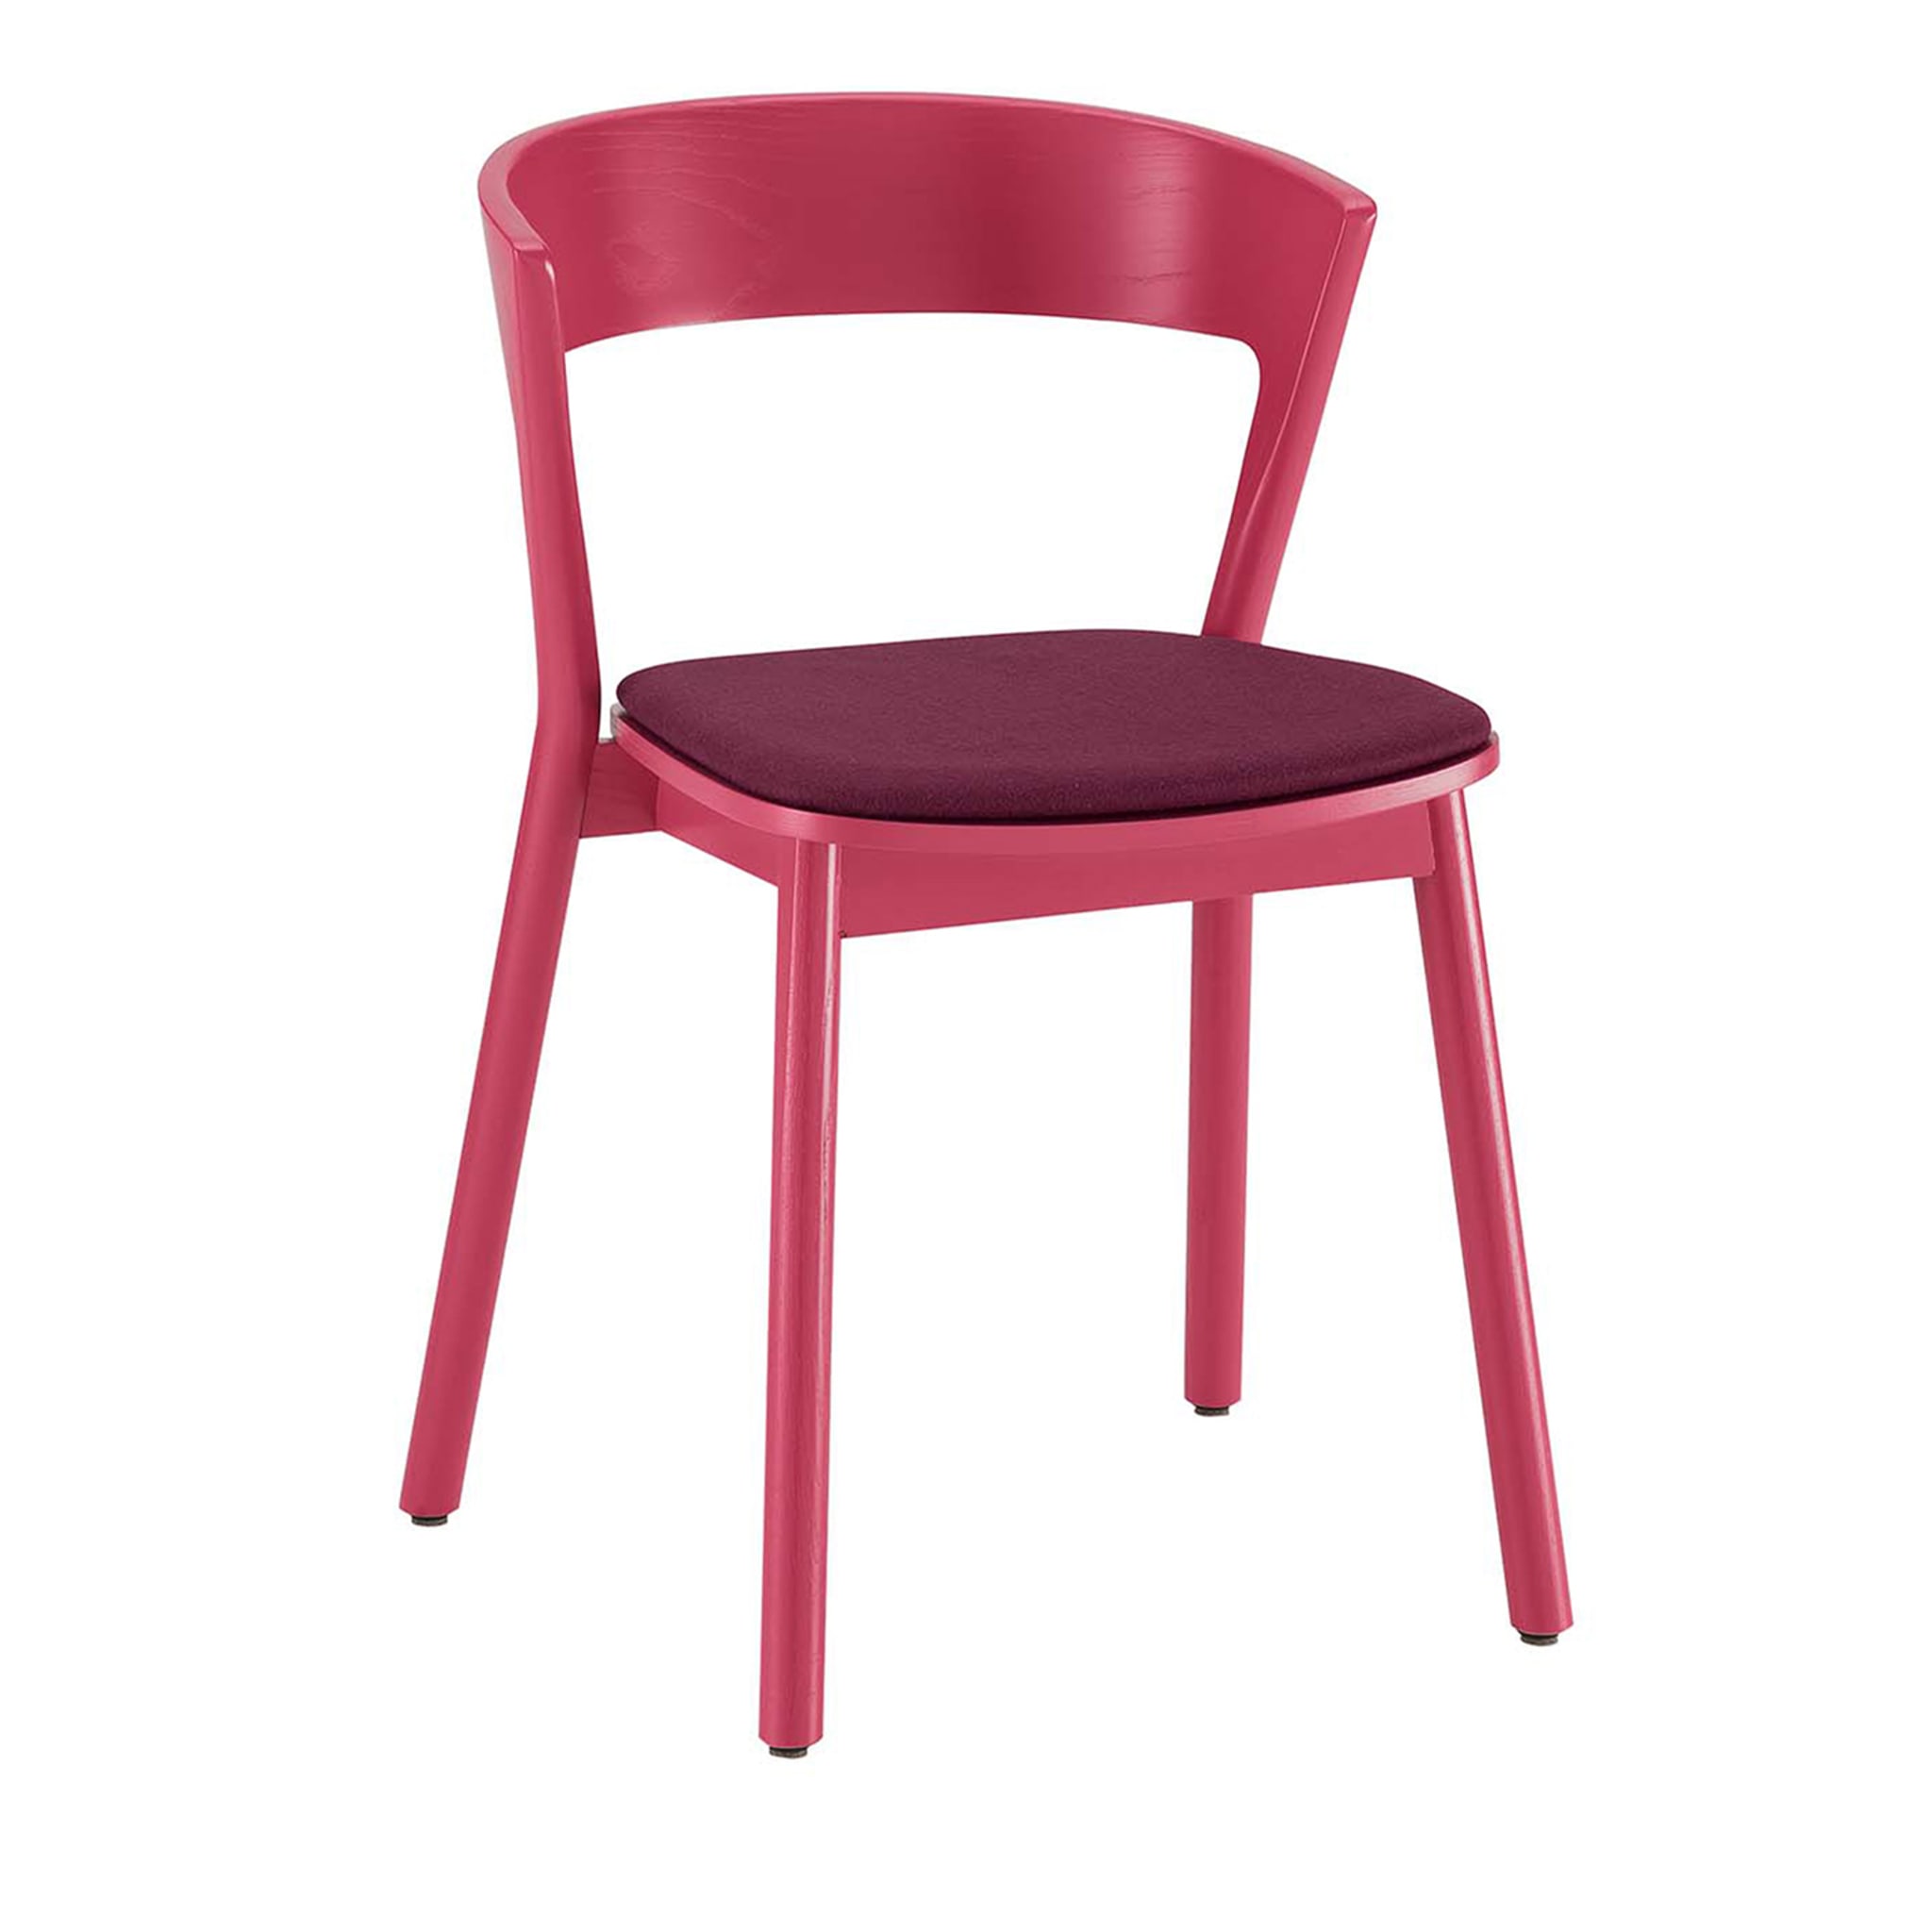 Edith Pink Chair by Massimo Broglio - Main view